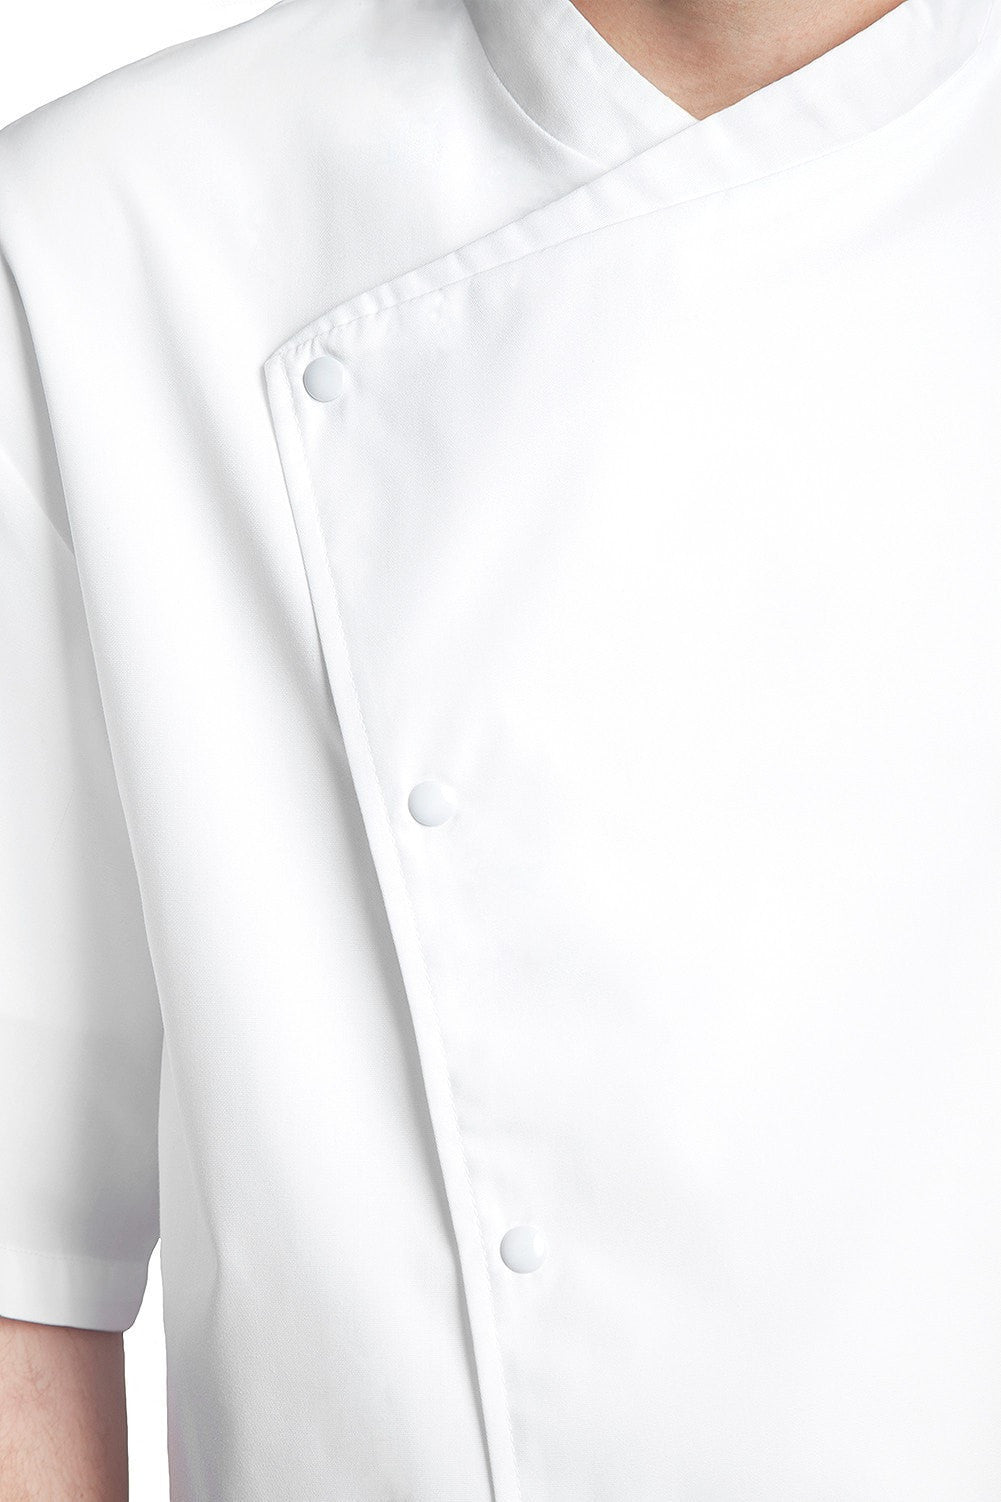 Julius Short Sleeve Chef Jacket by Bragard Front Close Up